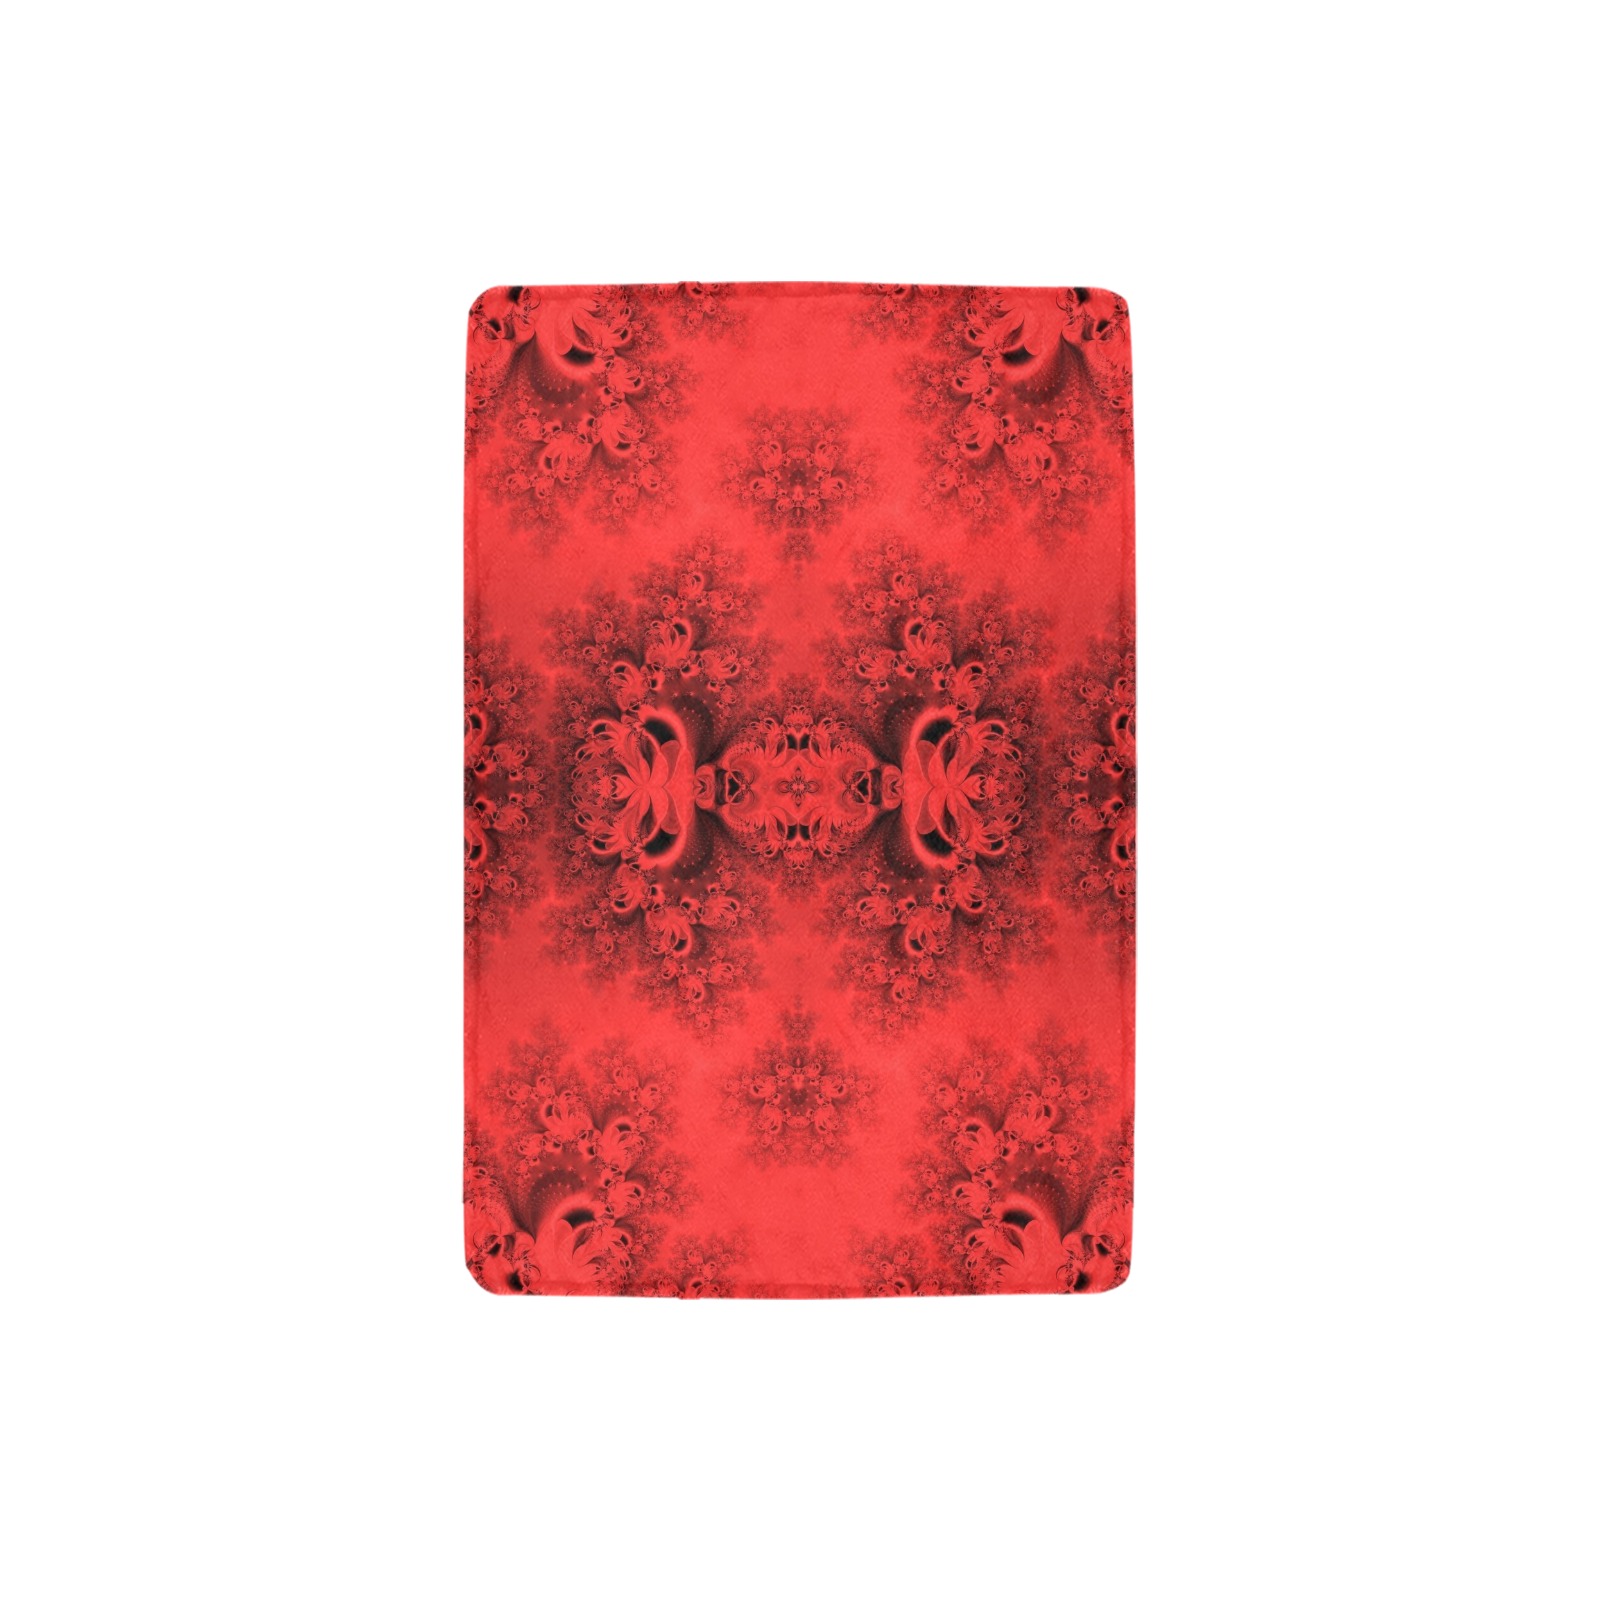 Autumn Reds in the Garden Frost Fractal Ultra-Soft Micro Fleece Blanket 32"x48"